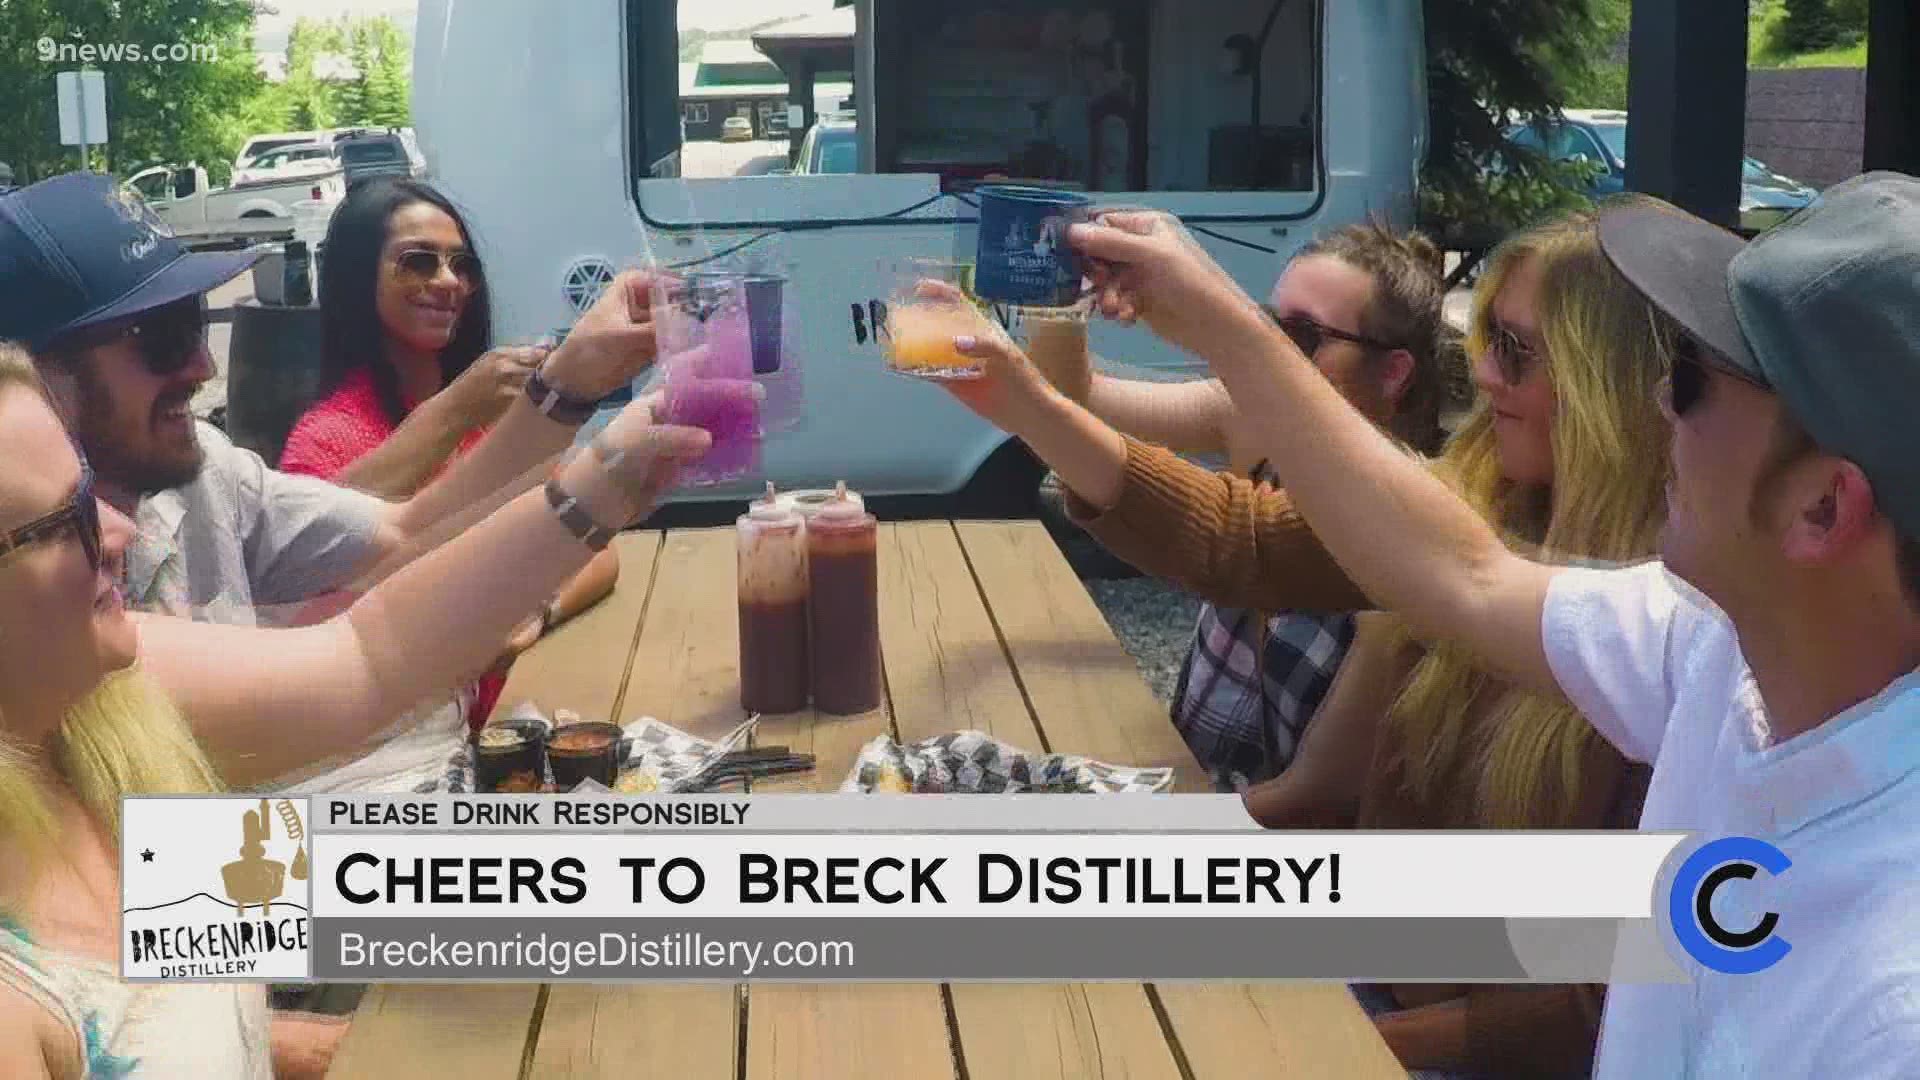 Find Breck's signature booze and upcoming events at BreckenridgeDistillery.com.